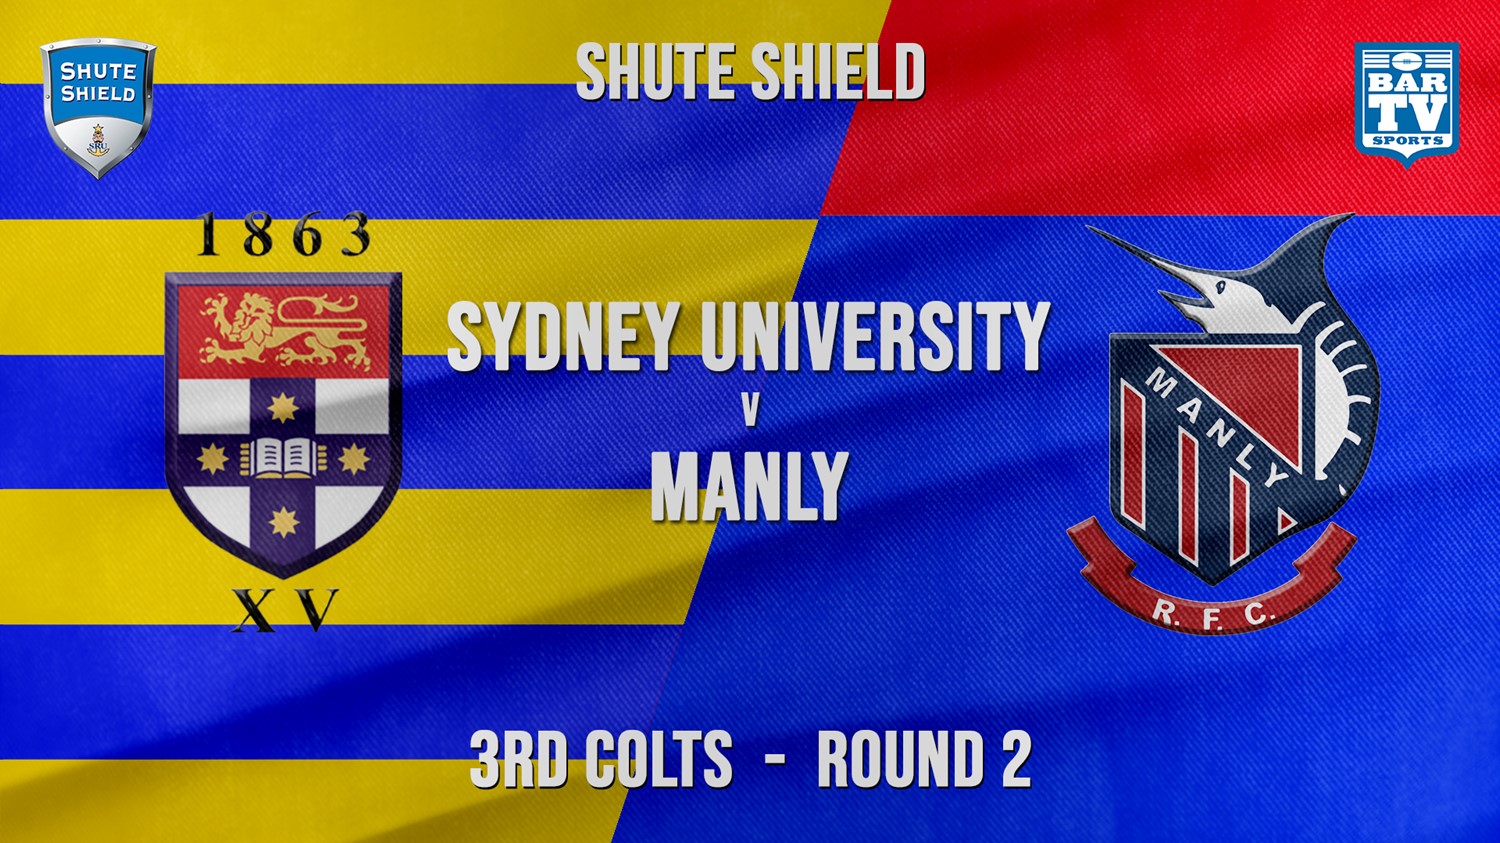 Shute Shield Round 2 - 3rd Colts - Sydney University v Manly Minigame Slate Image